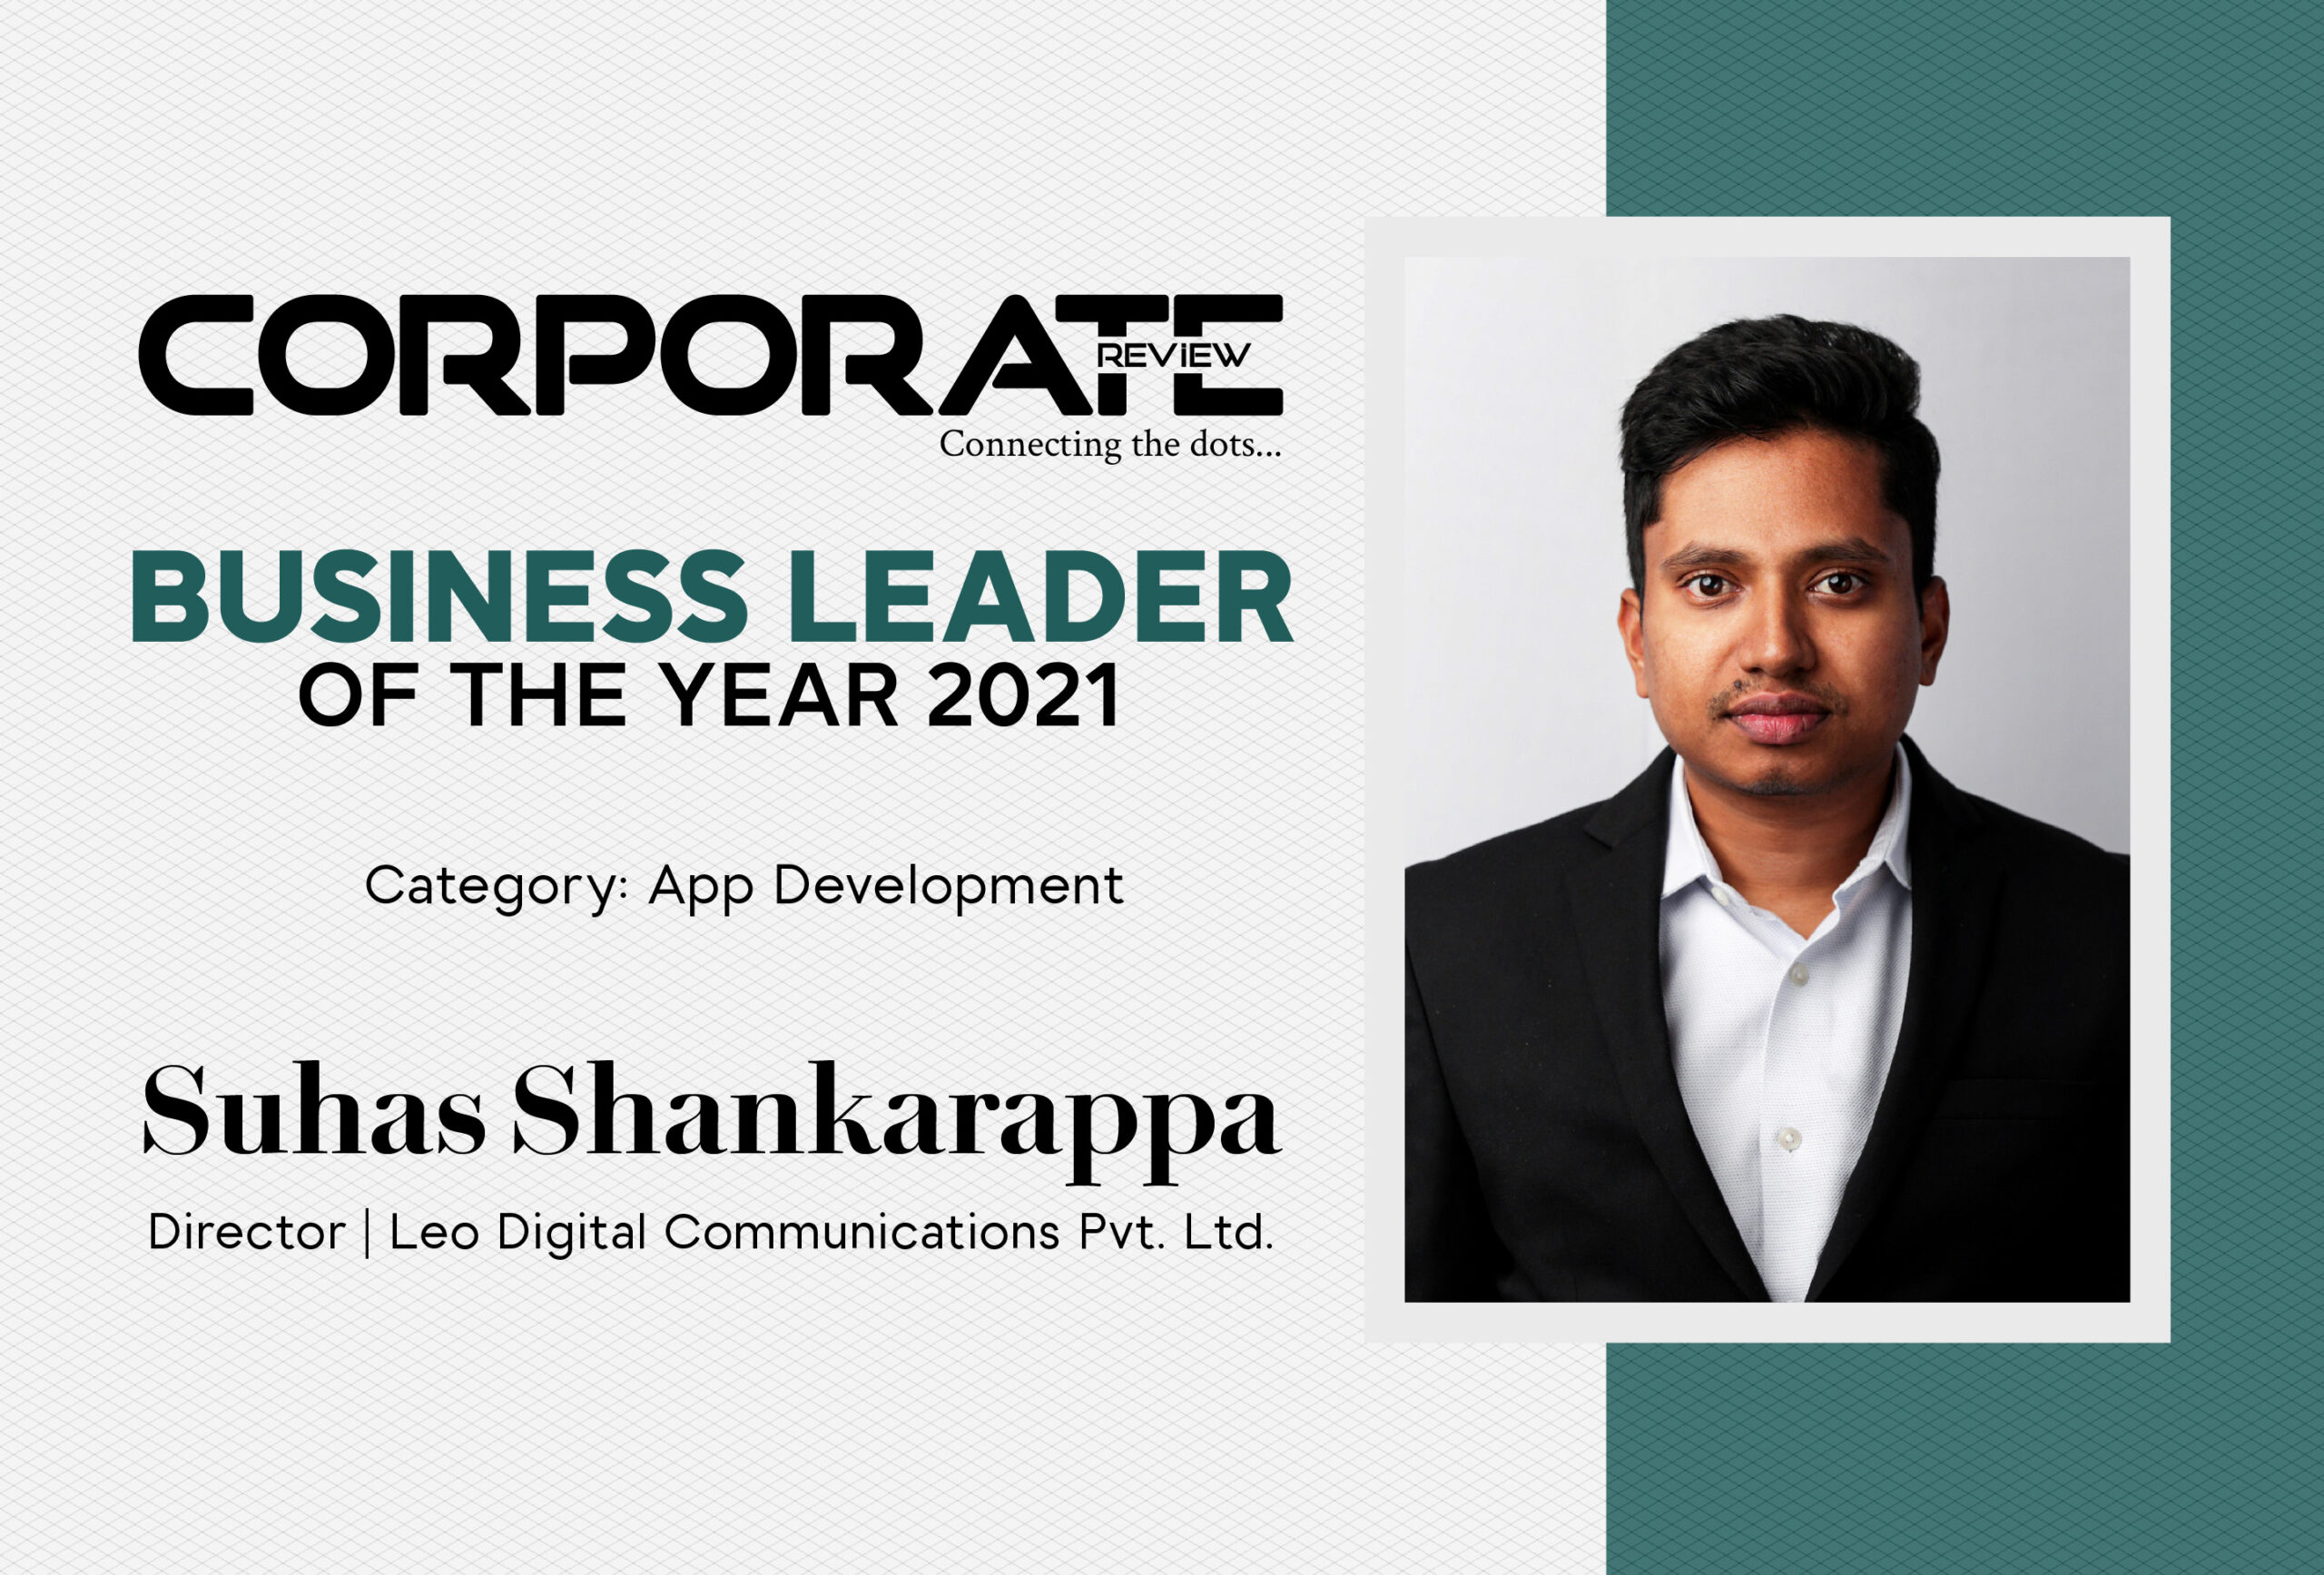 Business Leader of the Year 2021: Suhas Shankarappa, Director - Leo Digital Communications Pvt. Ltd.